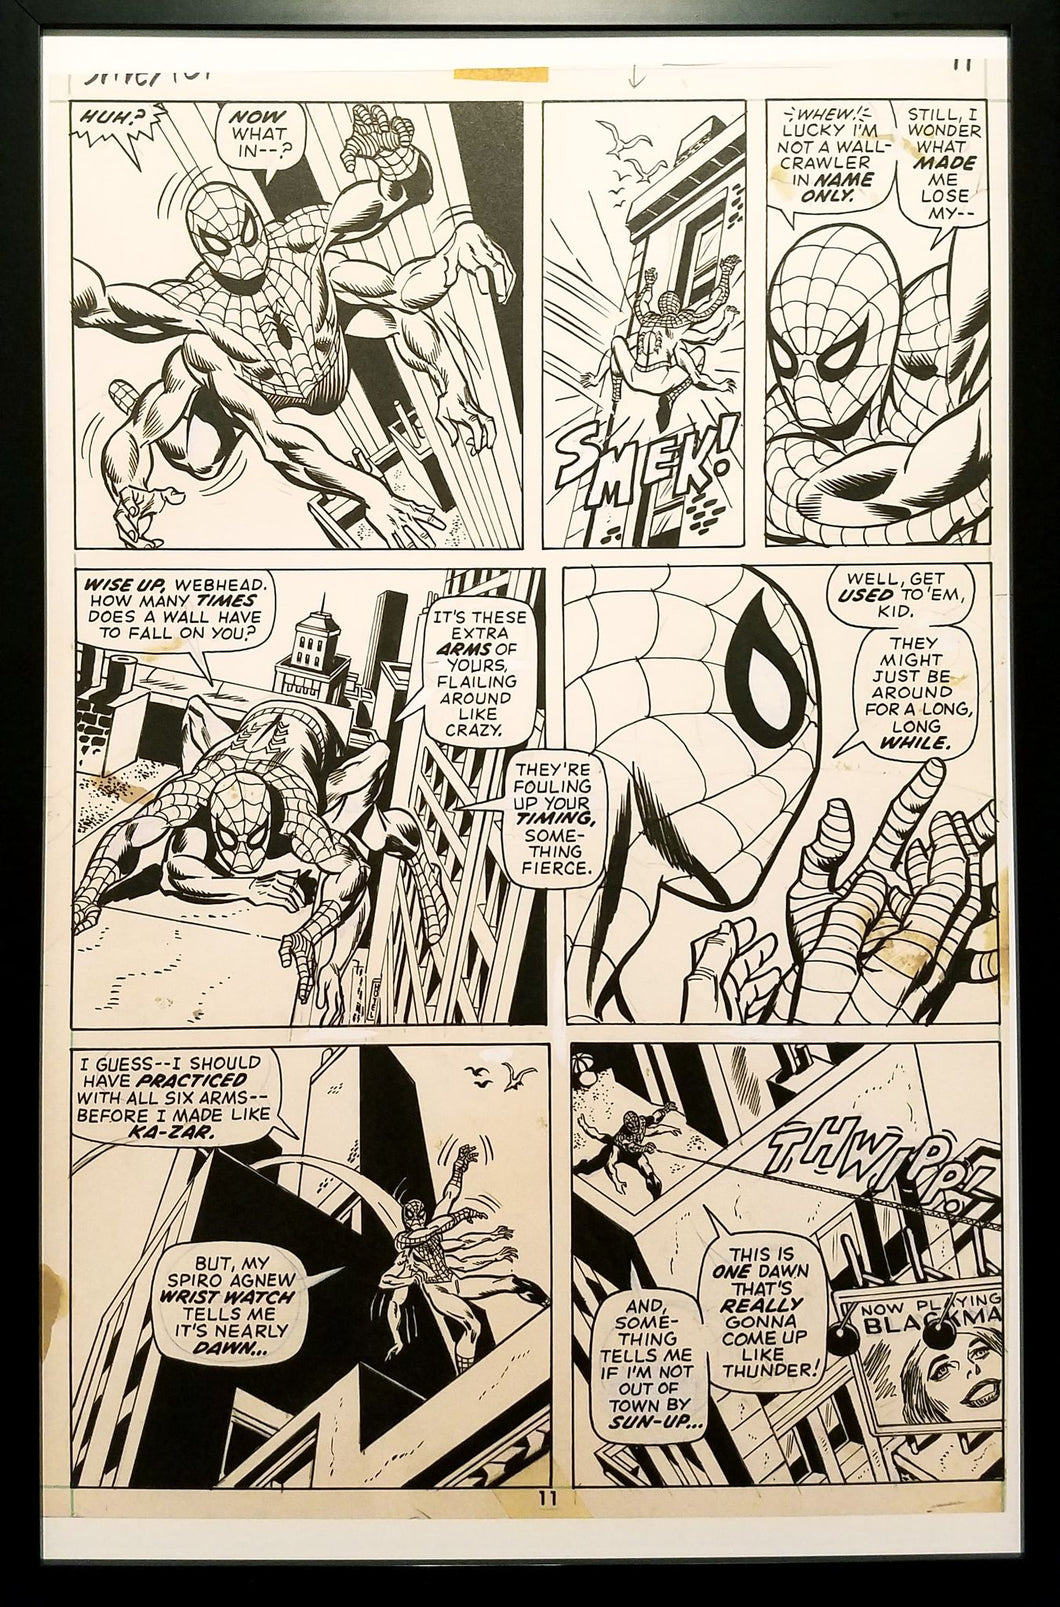 Amazing Spider-Man #101 pg. 11 by Gil Kane 11x17 FRAMED Original Art Poster Marvel Comics